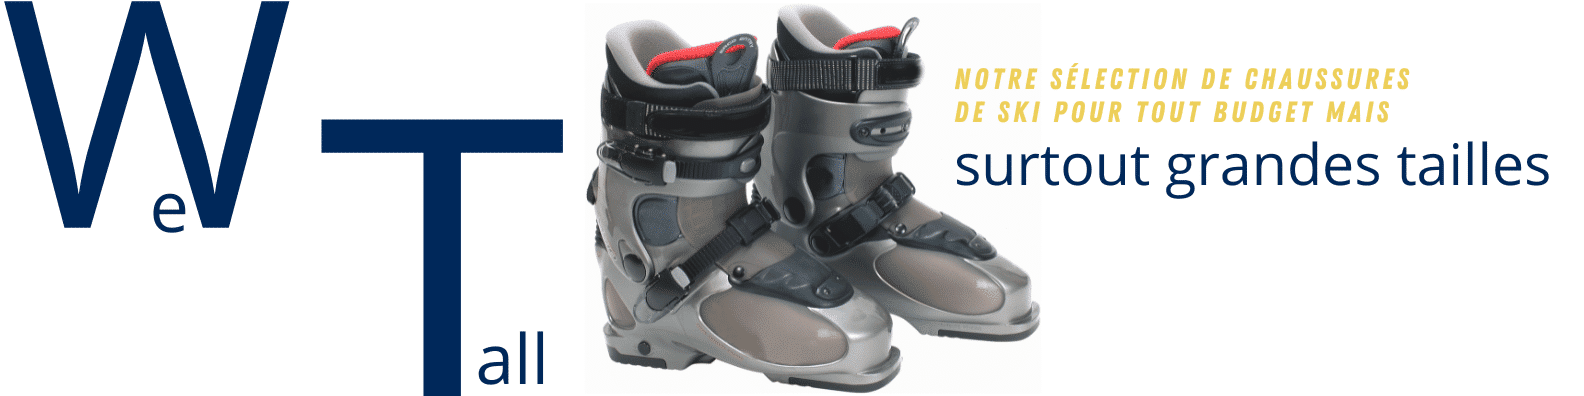 Chaussures de ski alpin